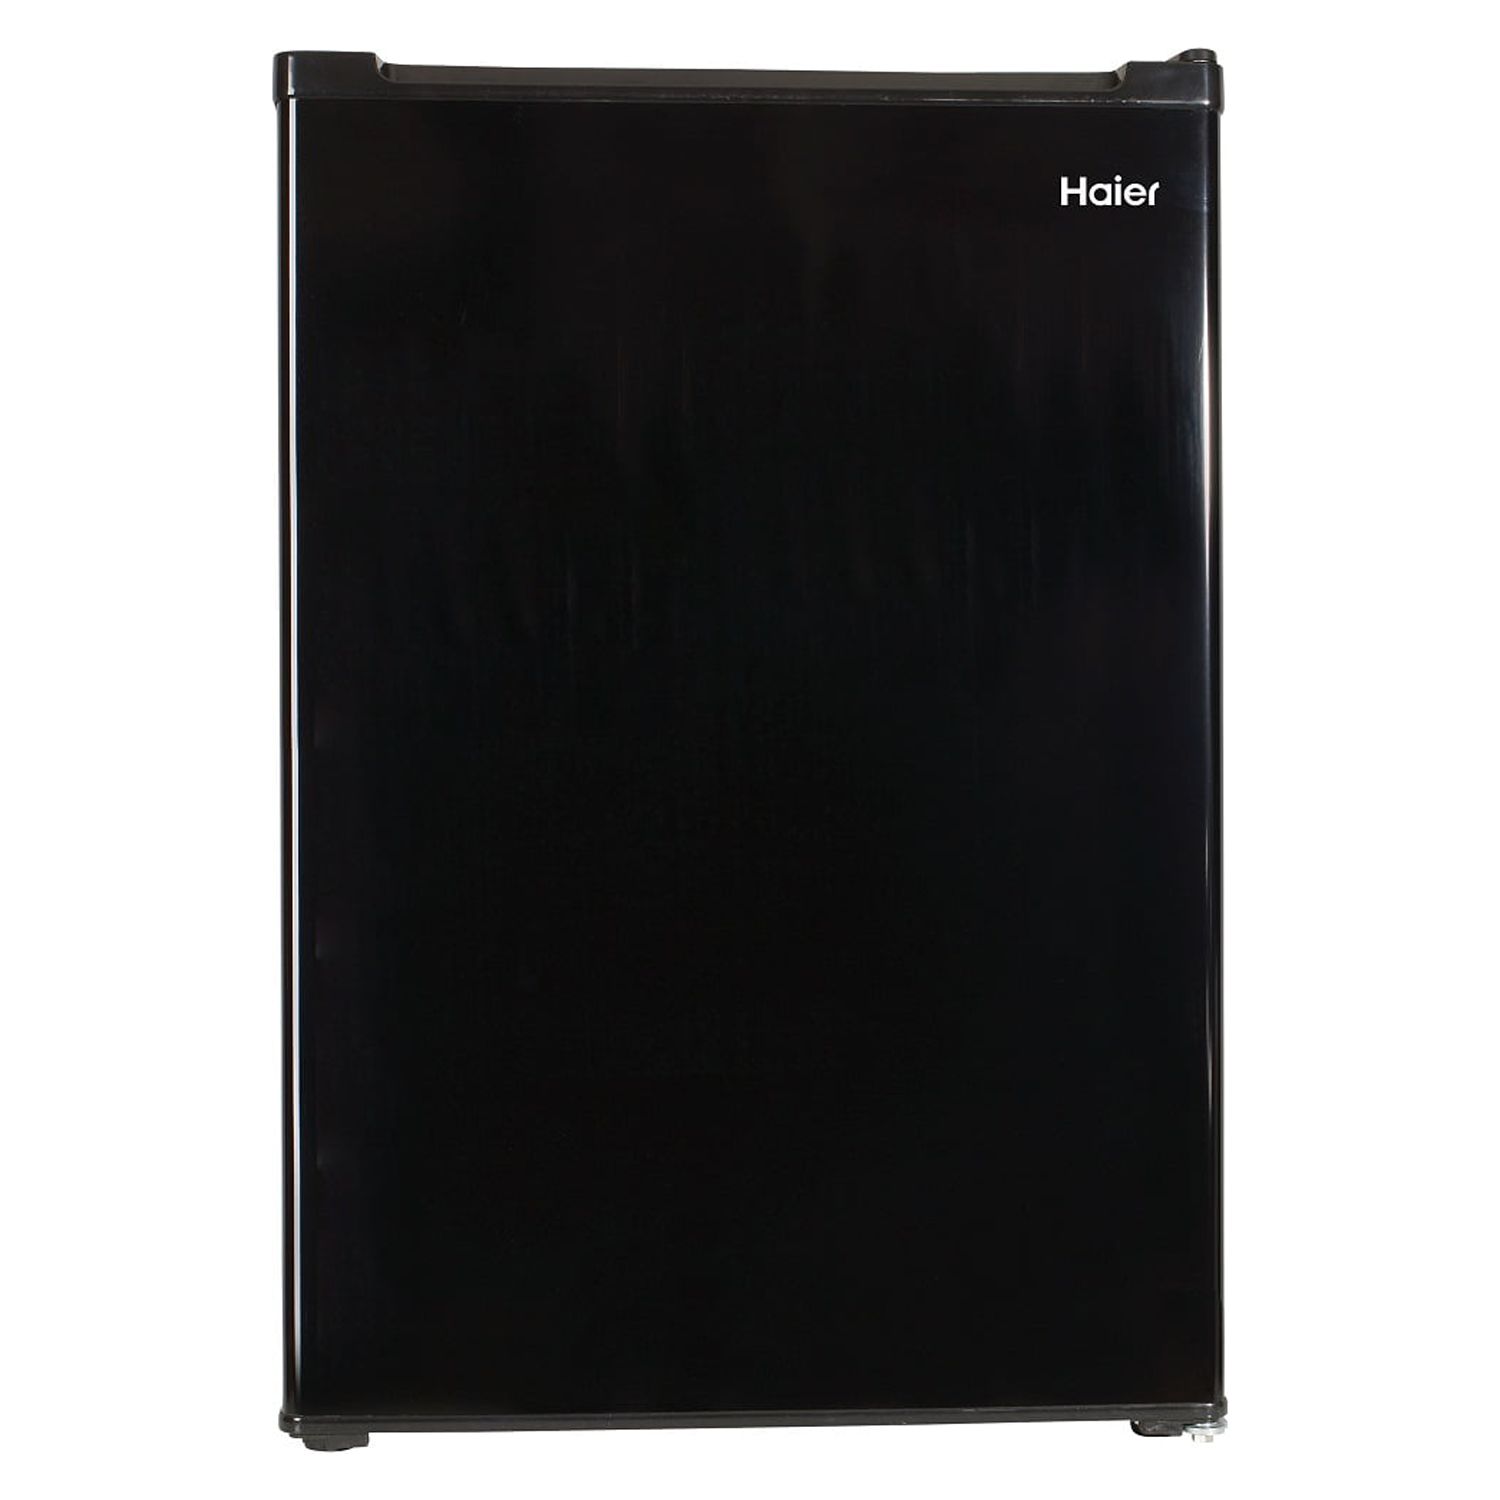 Haier 3.3 Cu Ft Single Door Compact Refrigerator HC33SW20RB, Black - image 1 of 4